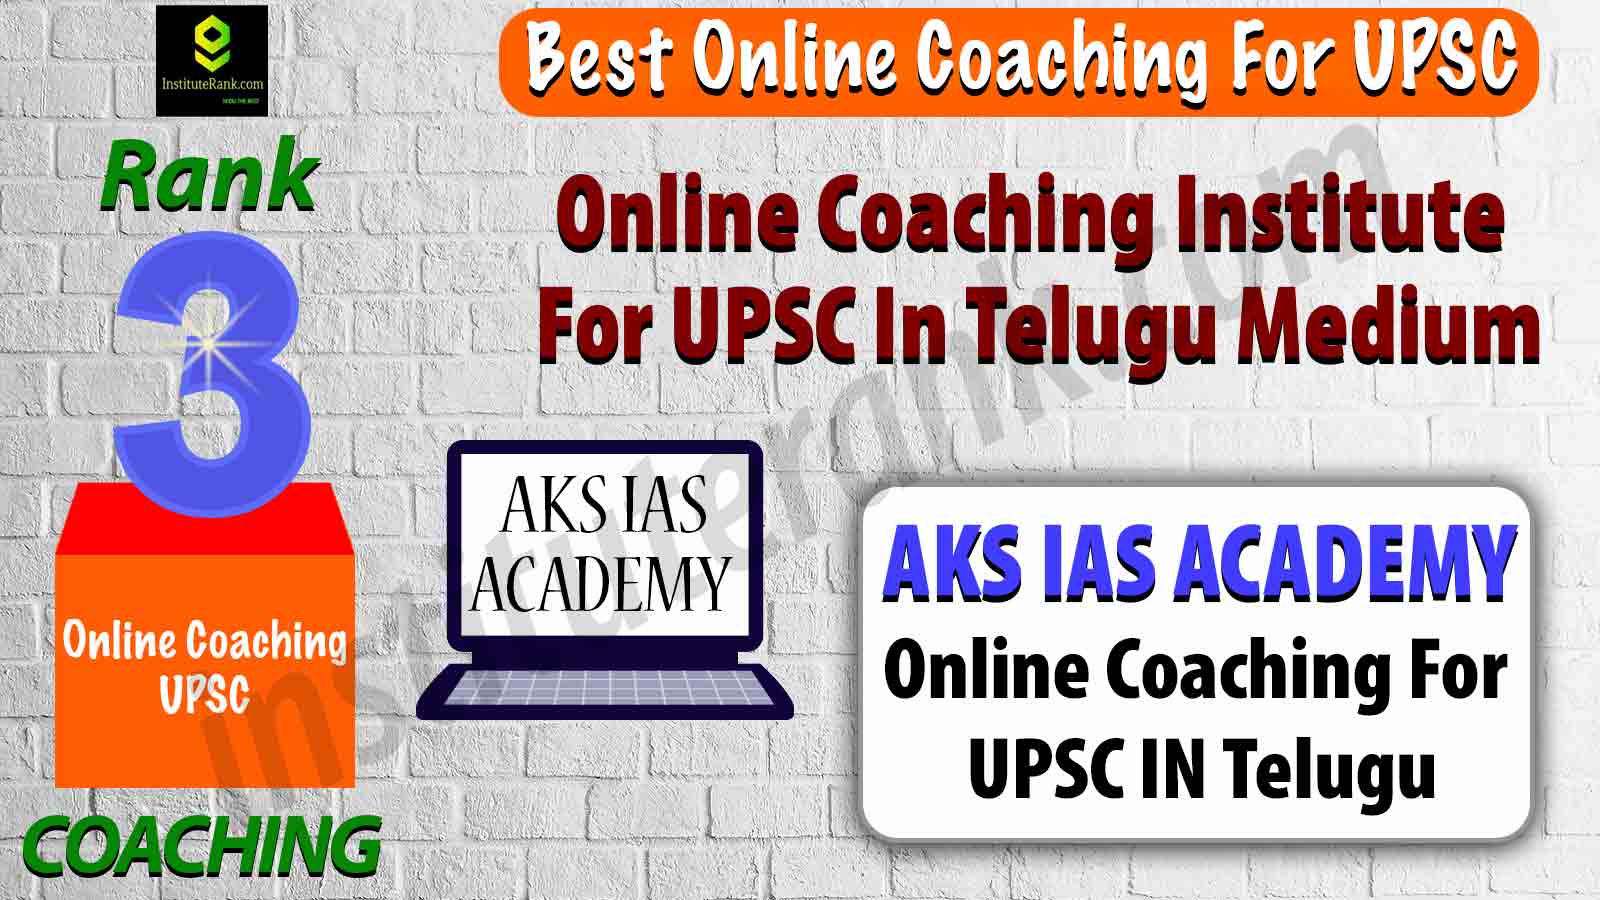 Top Online Coaching For UPSC in Telugu Medium